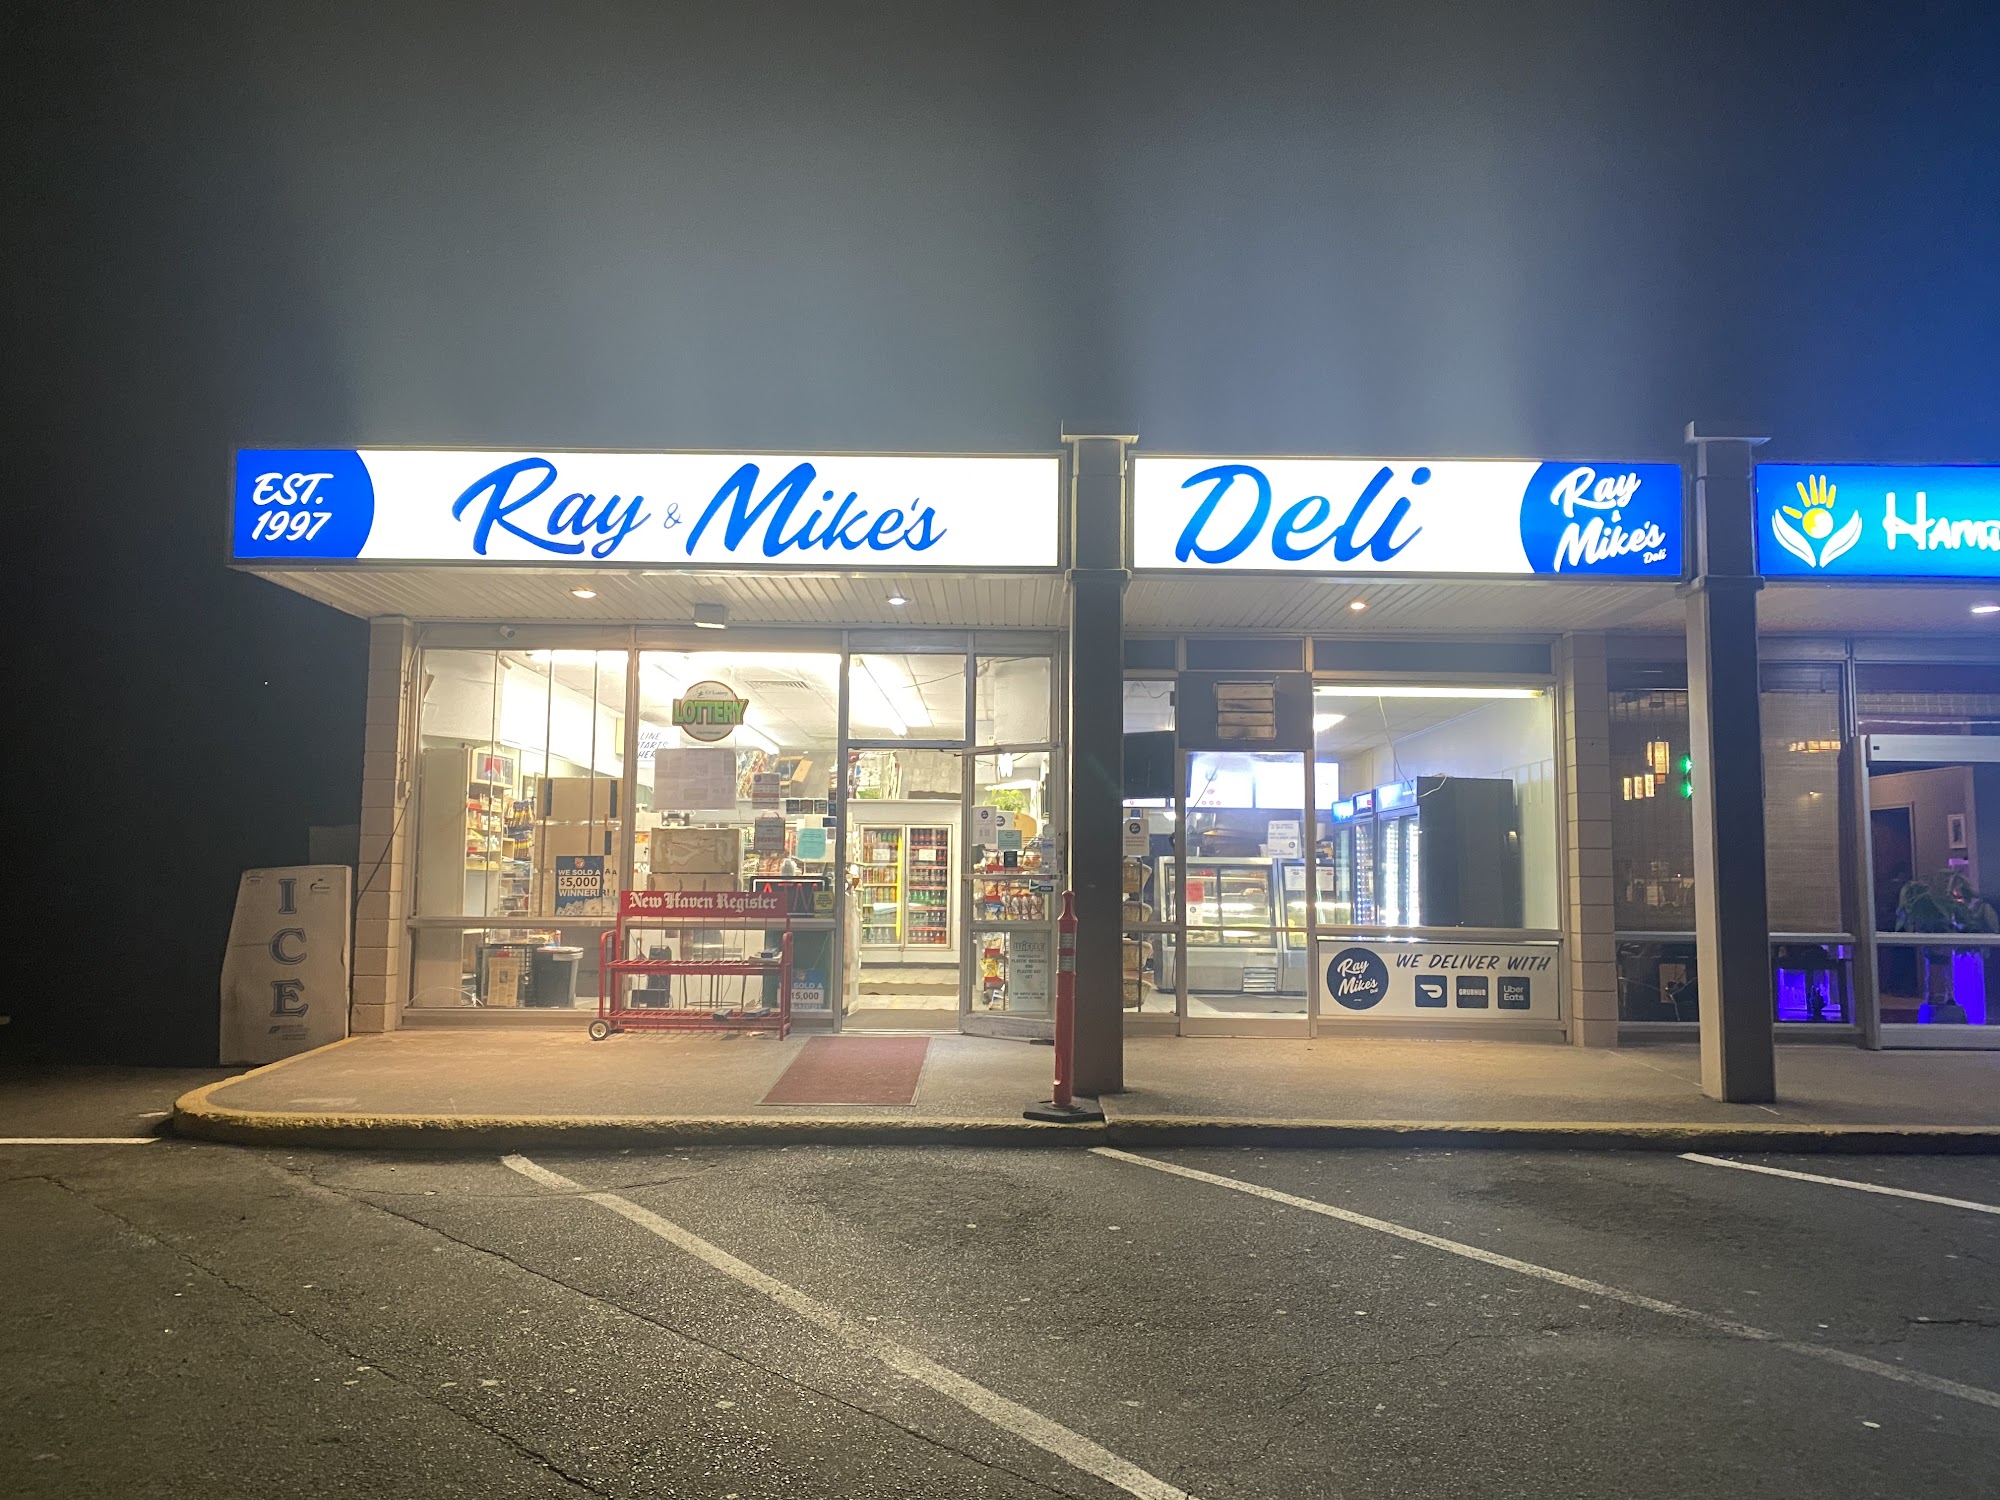 Ray & Mike's Deli